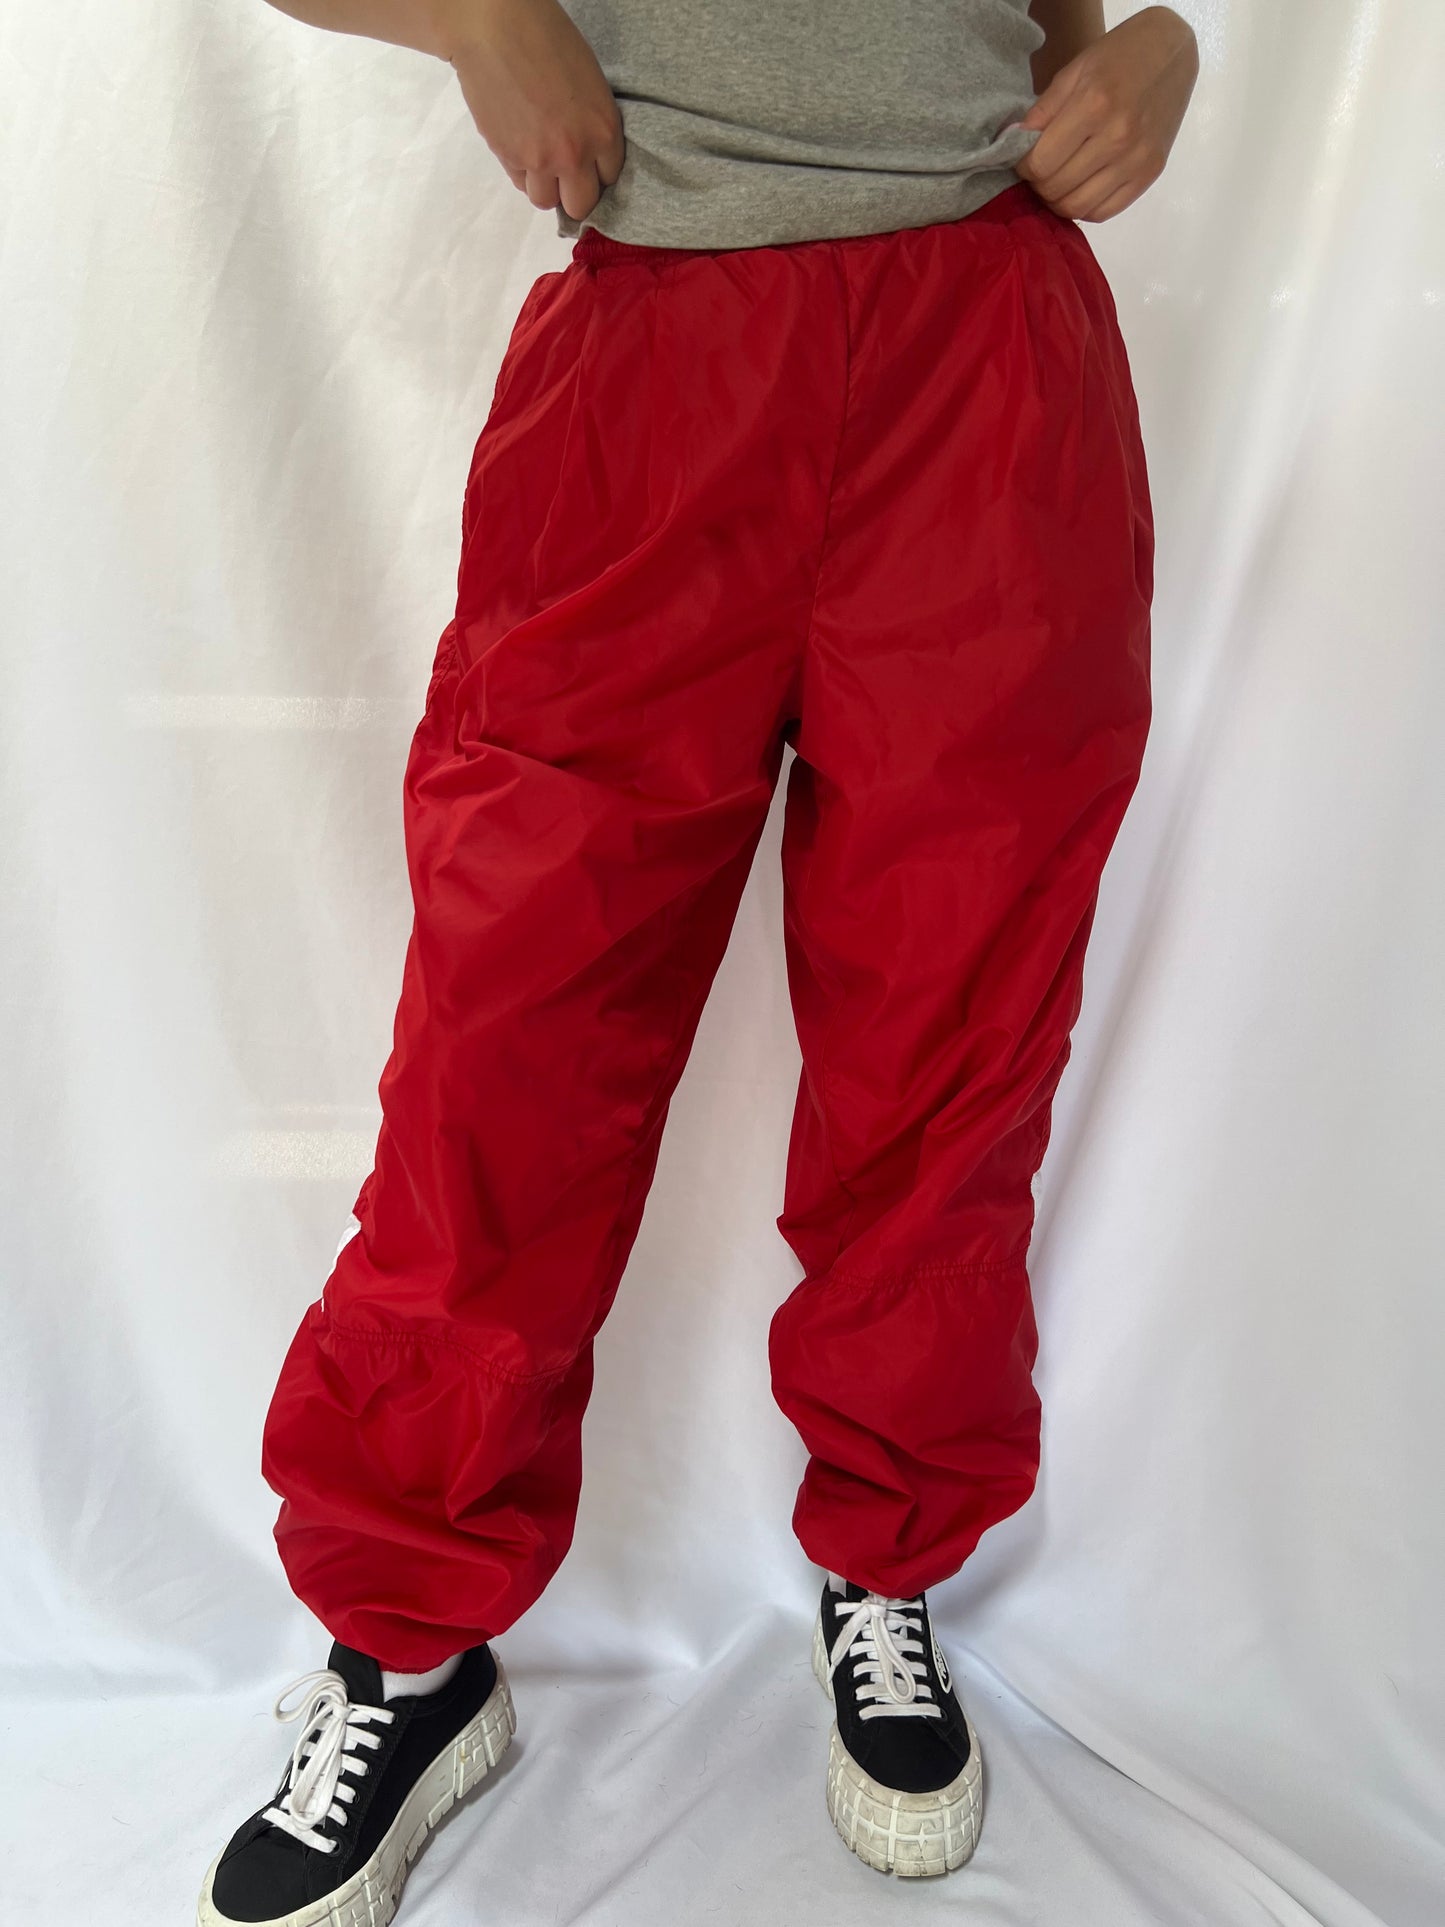 Nike Red/White Nylon Pants - XL